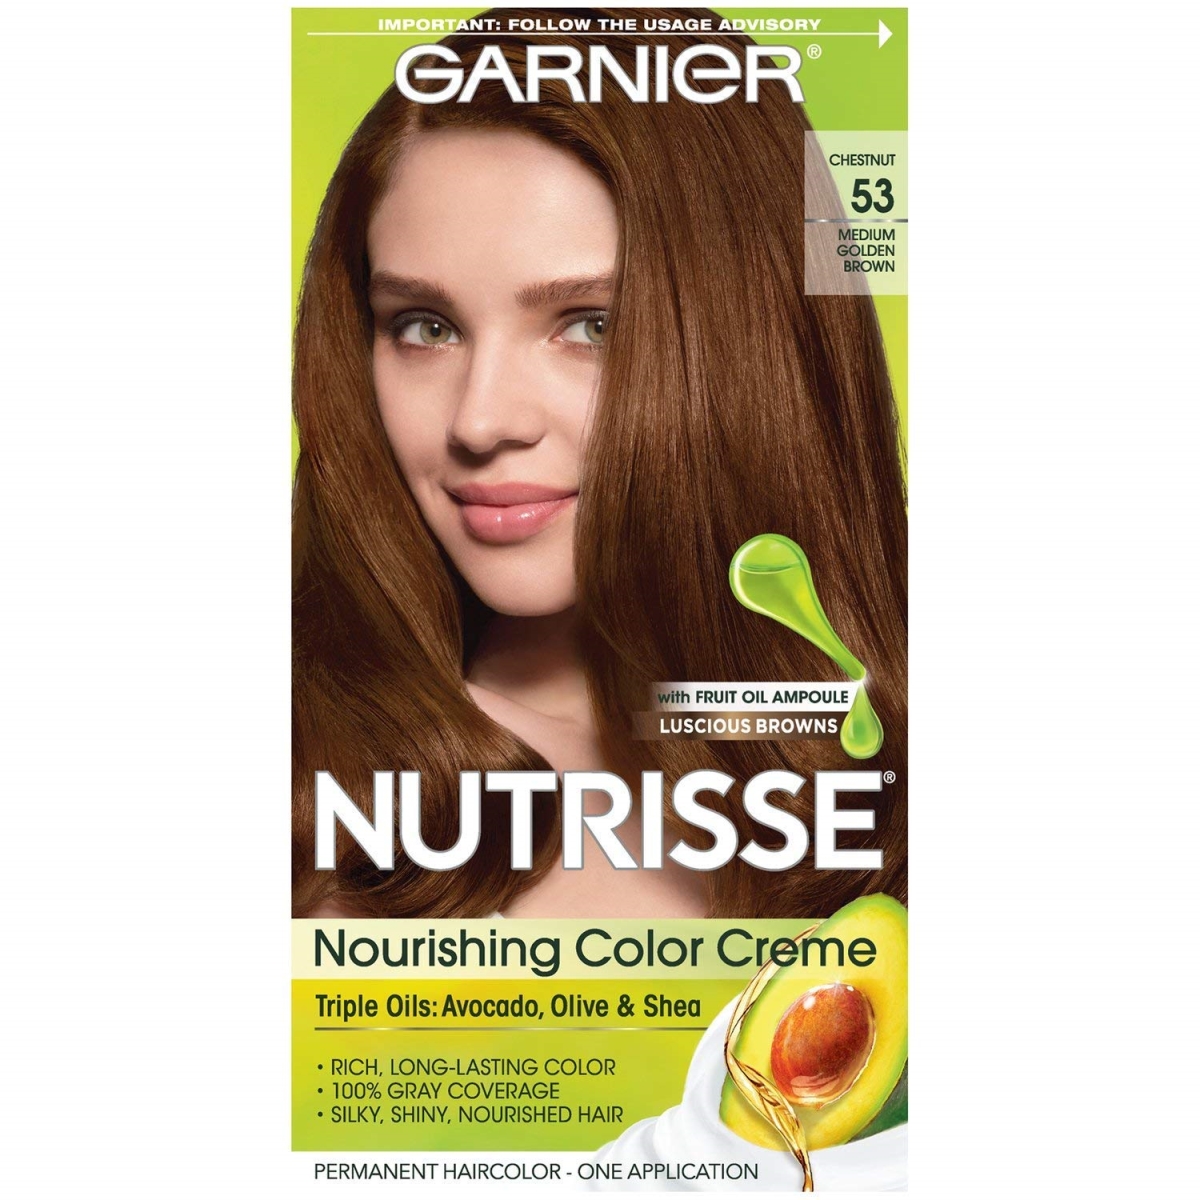 Garnier K0001466 Unisex Nutrisse Nourishing 1-Application Hair Color Creme - 53 Medium Golden Brown - Pack of 6